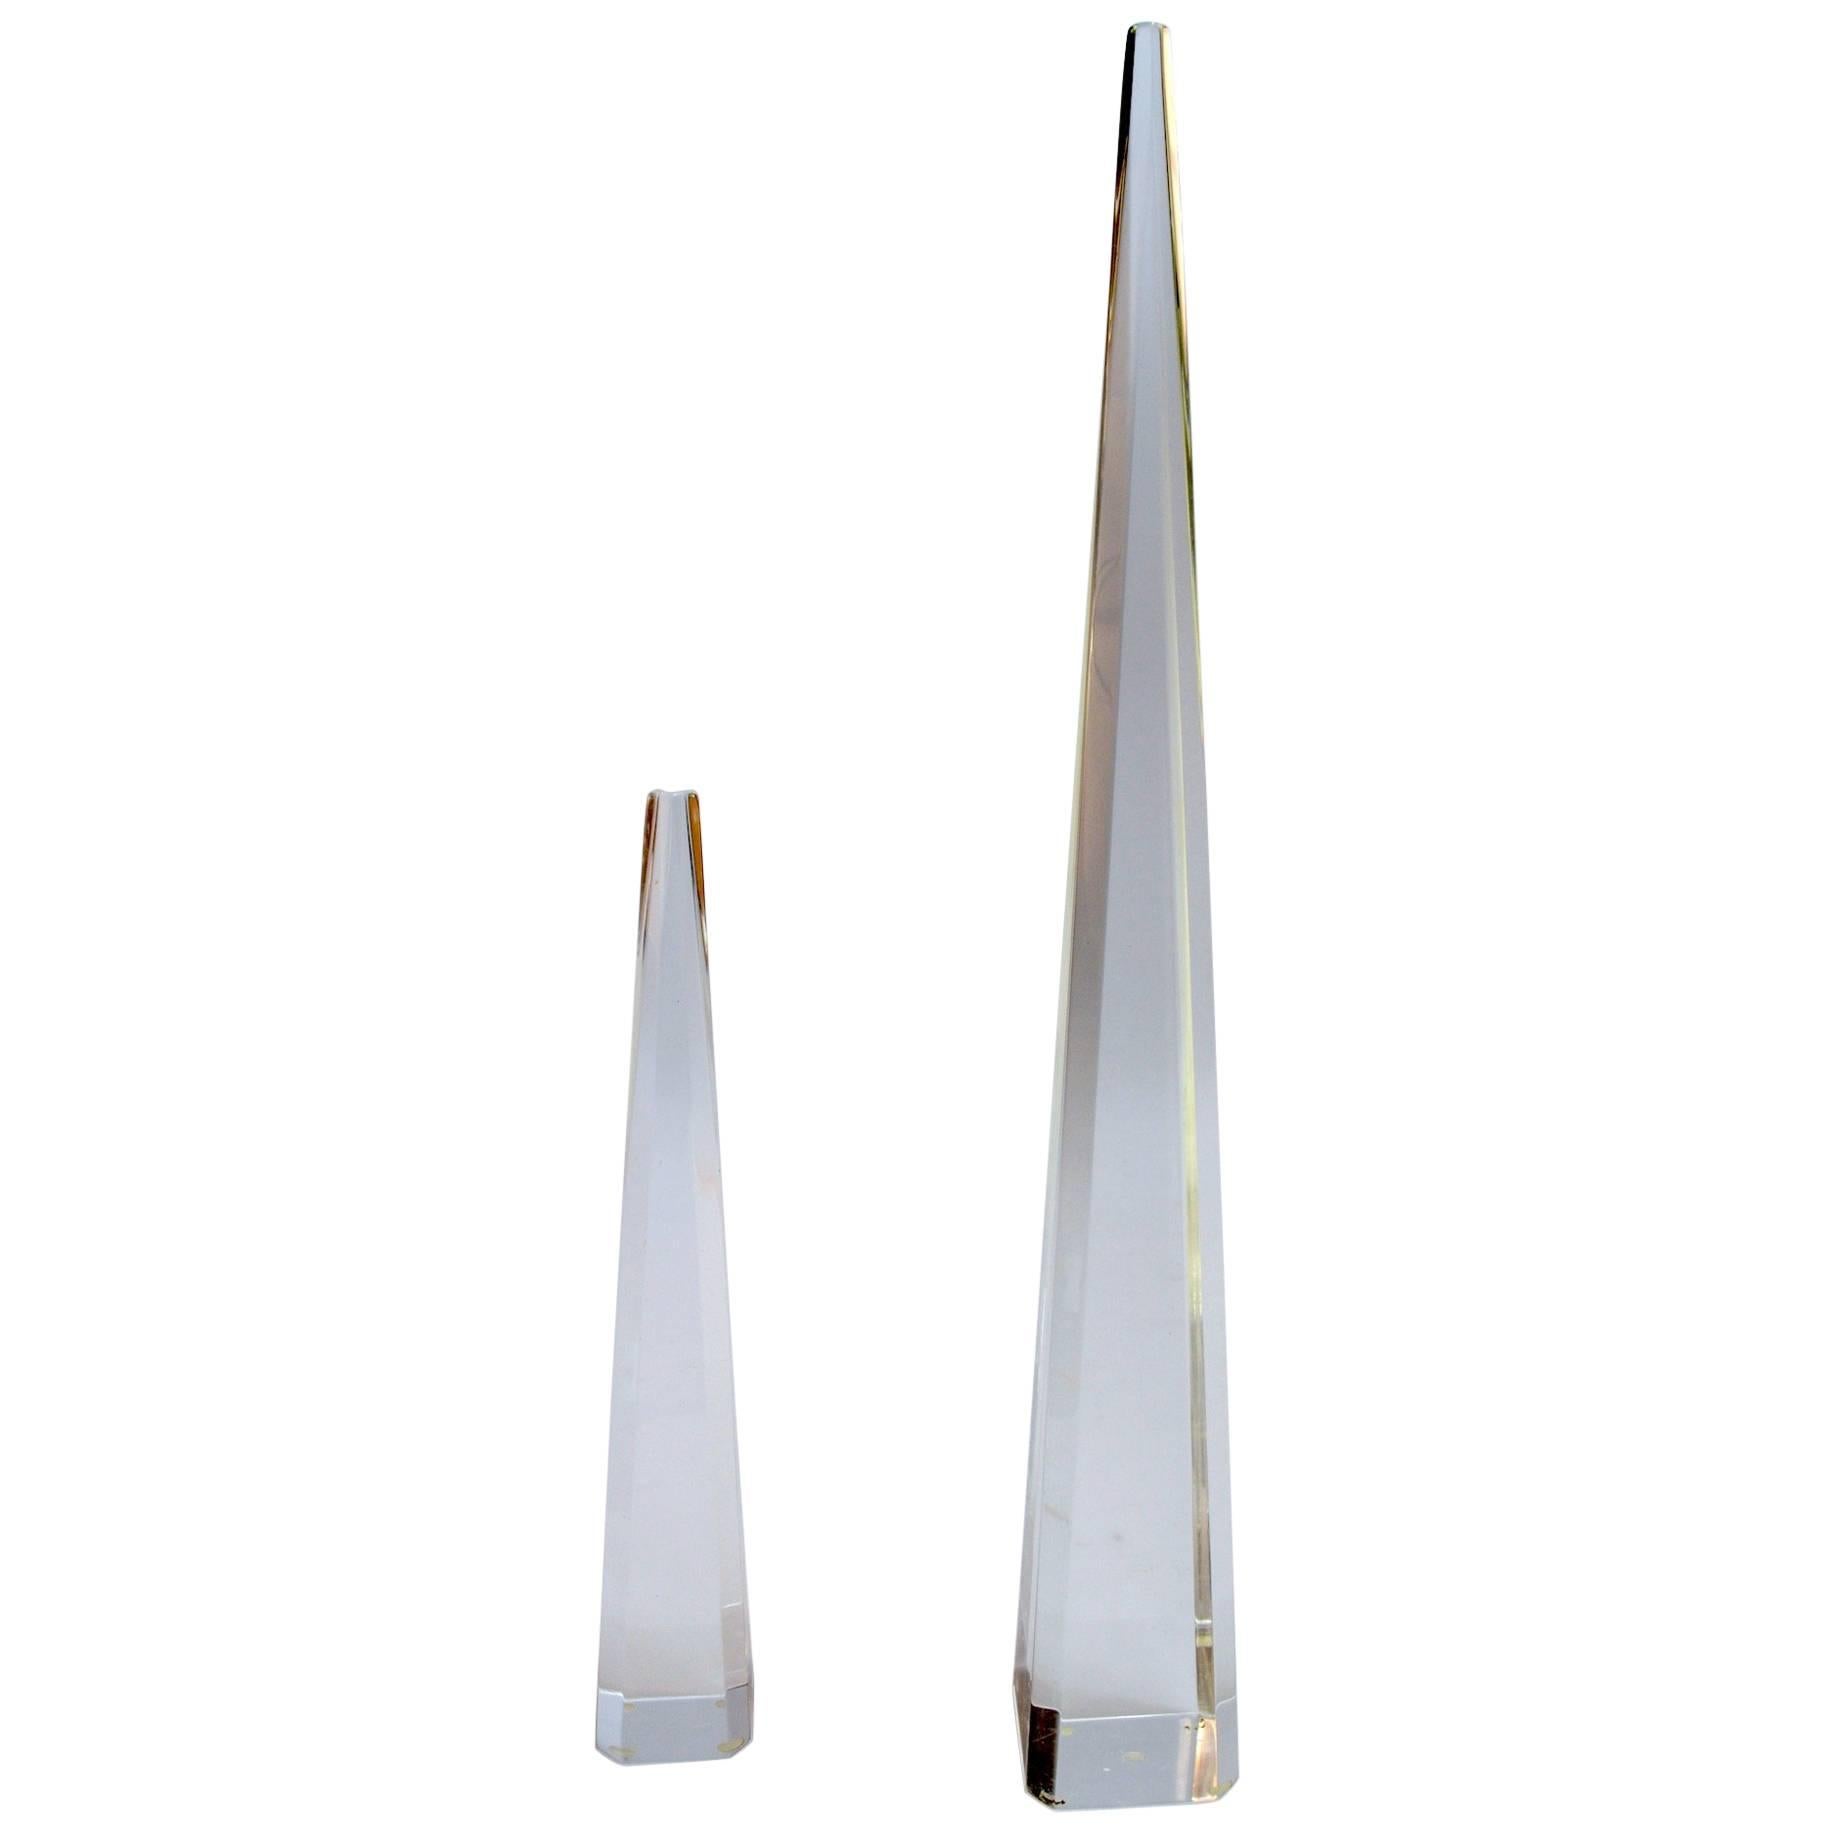 Two Lucite Obelisk Decorative Sculptures